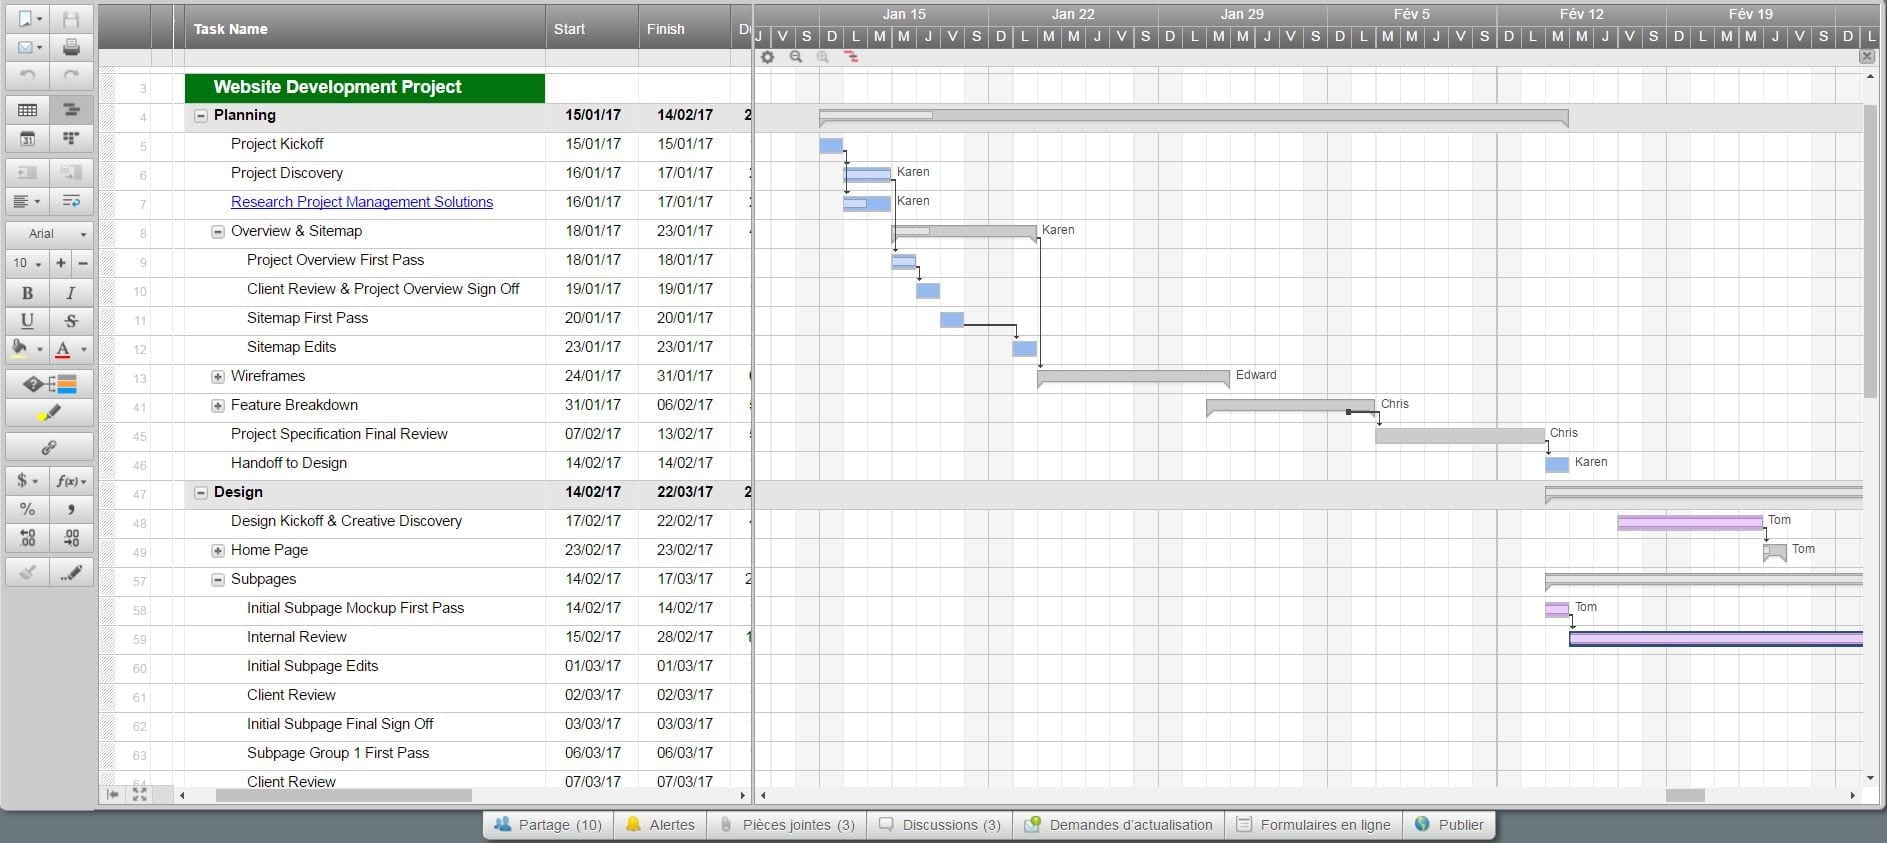 Timeline Spreadsheet Template Timeline Spreadsheet Spreadsheet Templates for Busines ...1887 x 843